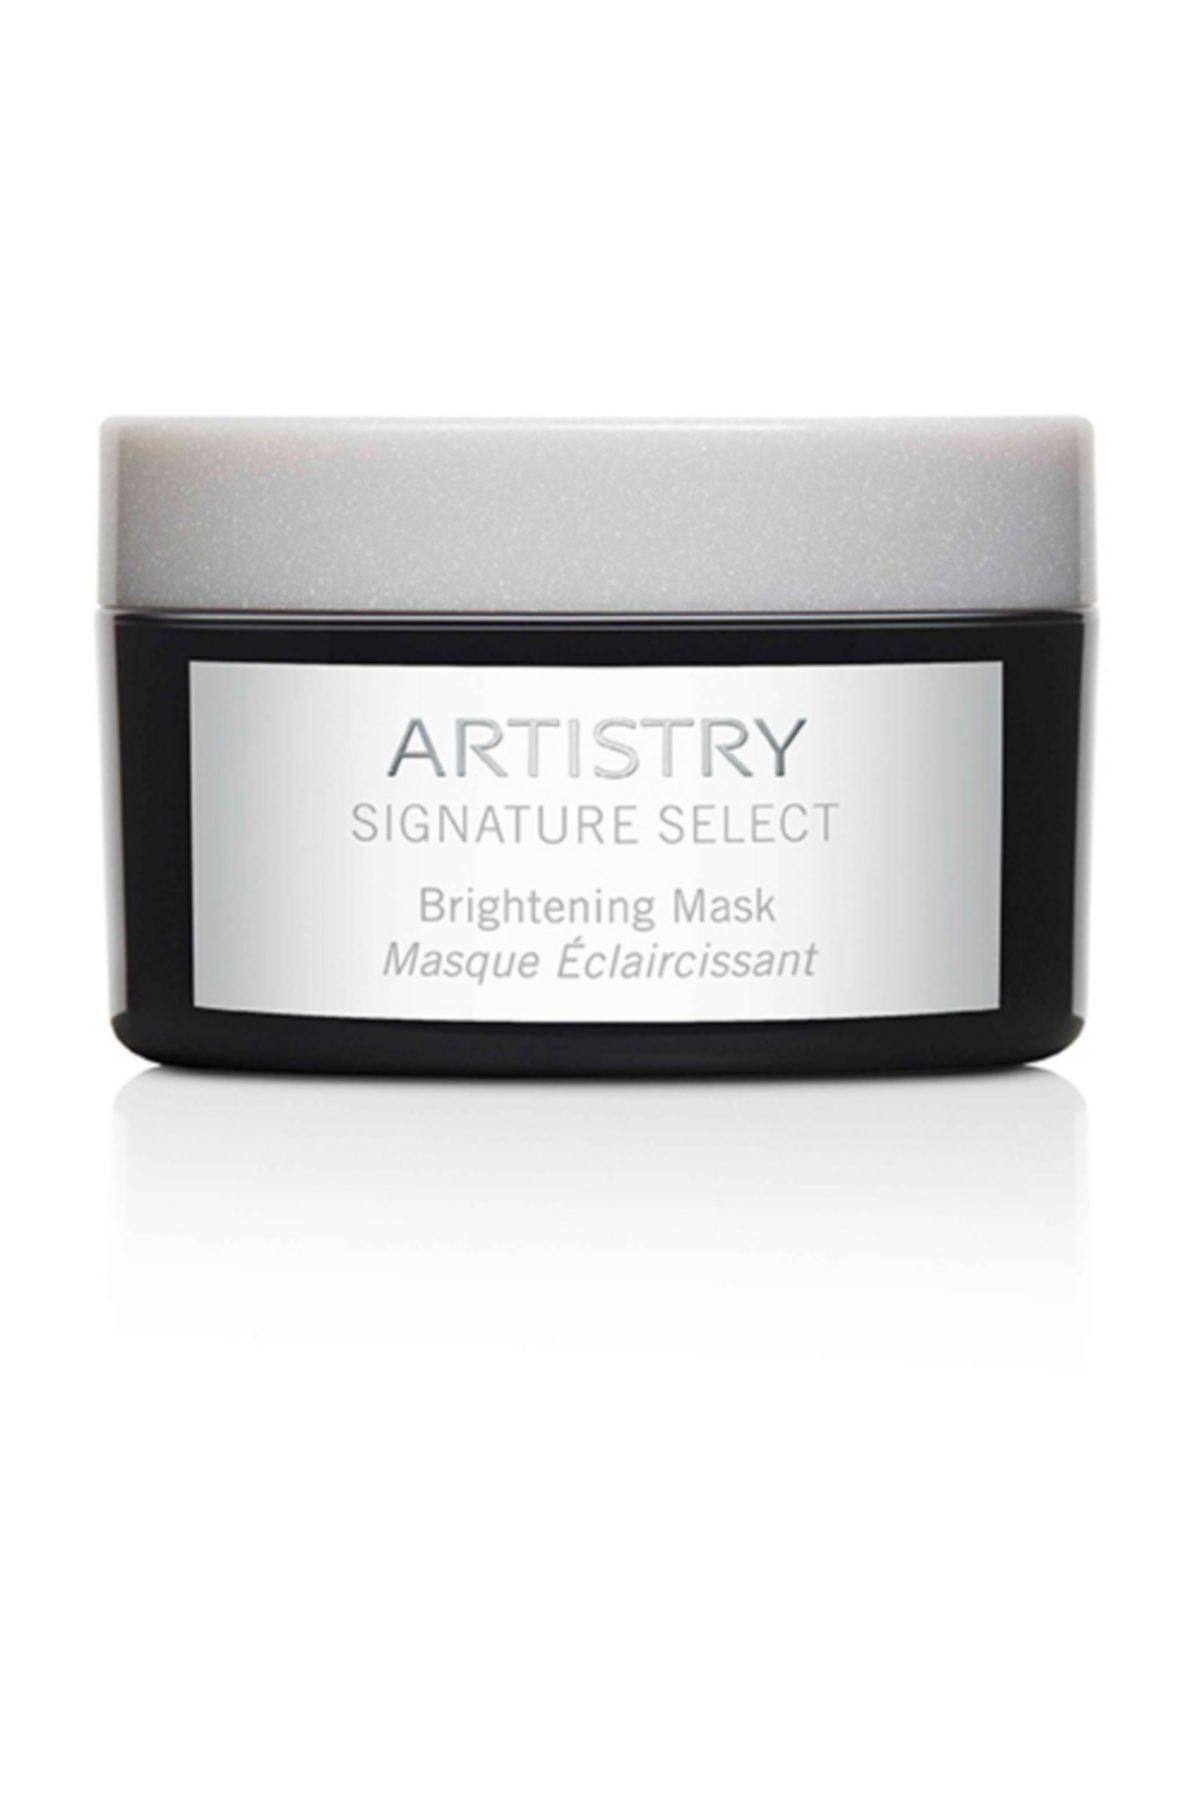 Amway ماسک روشنایی آرتیستری سیگنچر سلکت ۱۰۰ گرم